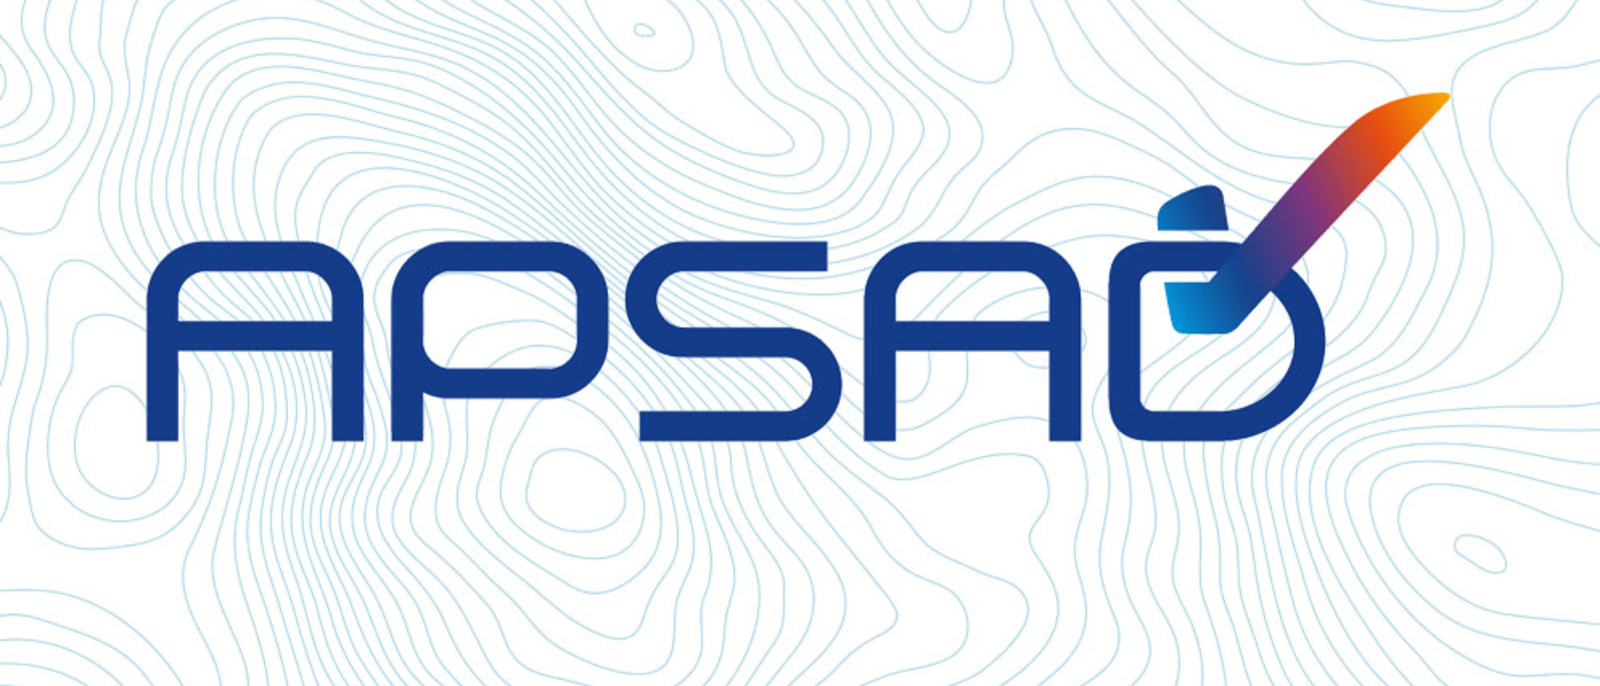 Logo APSAD